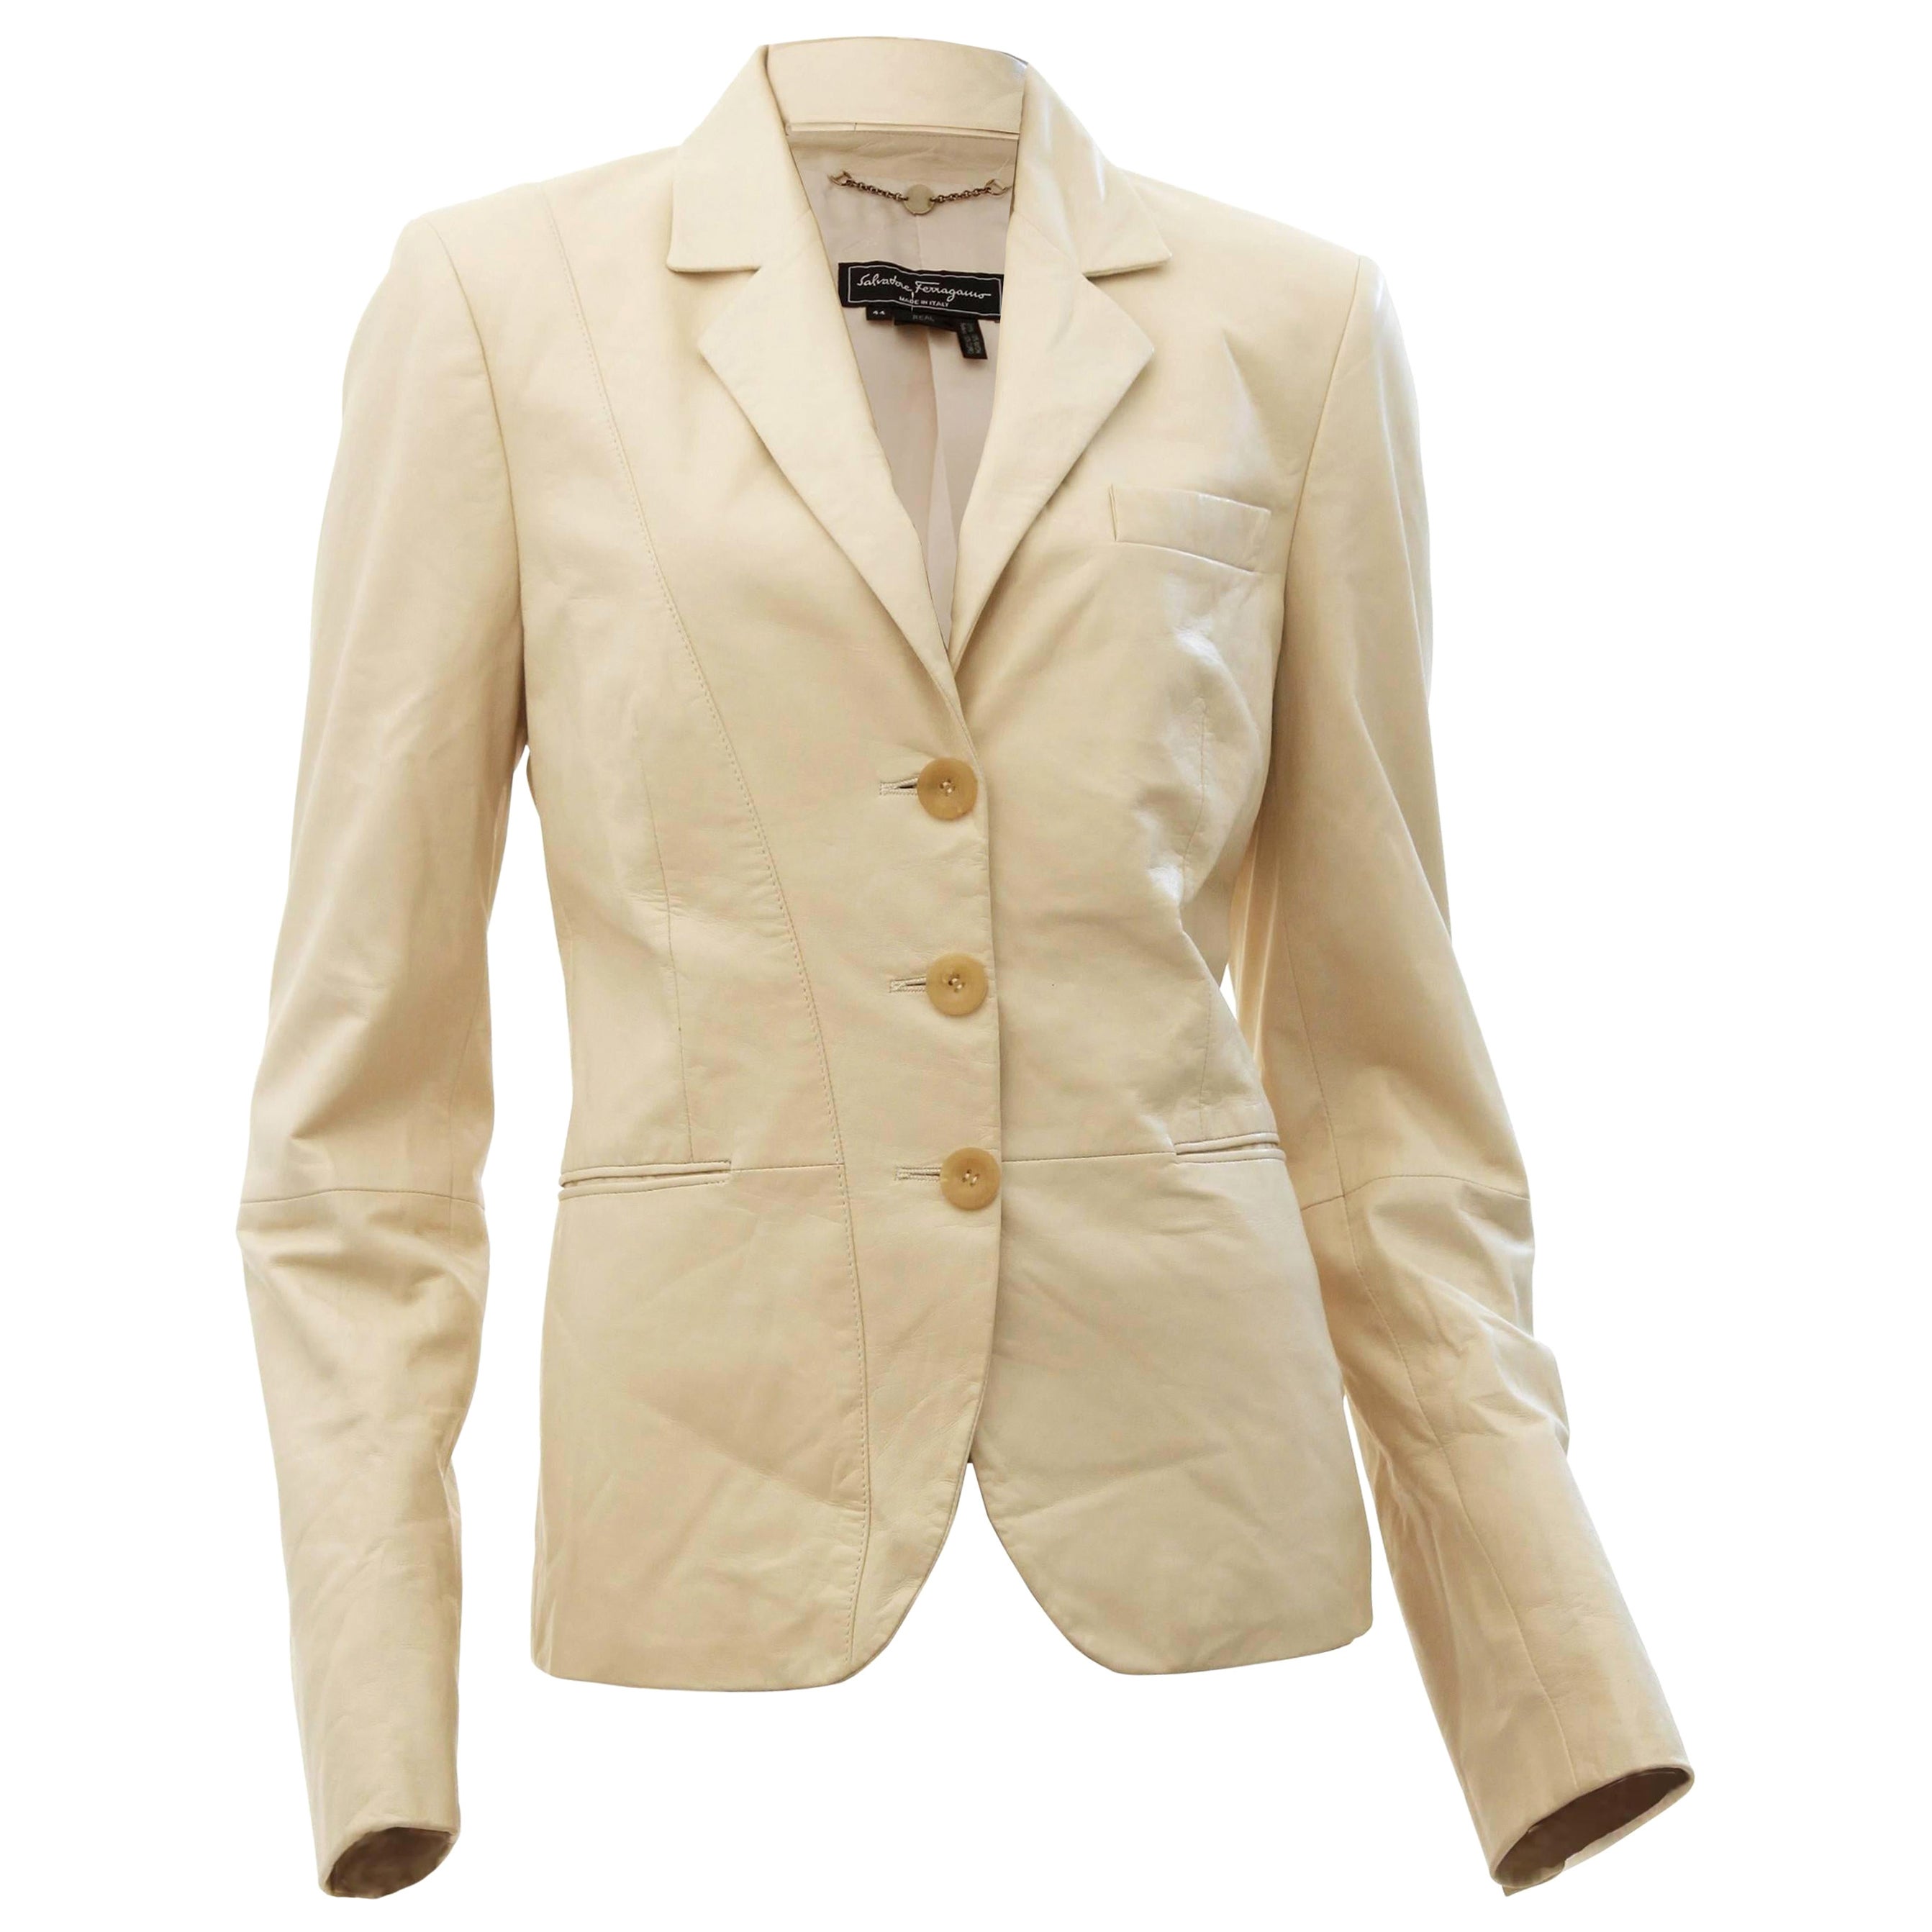 Salvatore Ferragamo Jacket Soft Leather Vanilla Cream Blazer Size 44 Italy For Sale